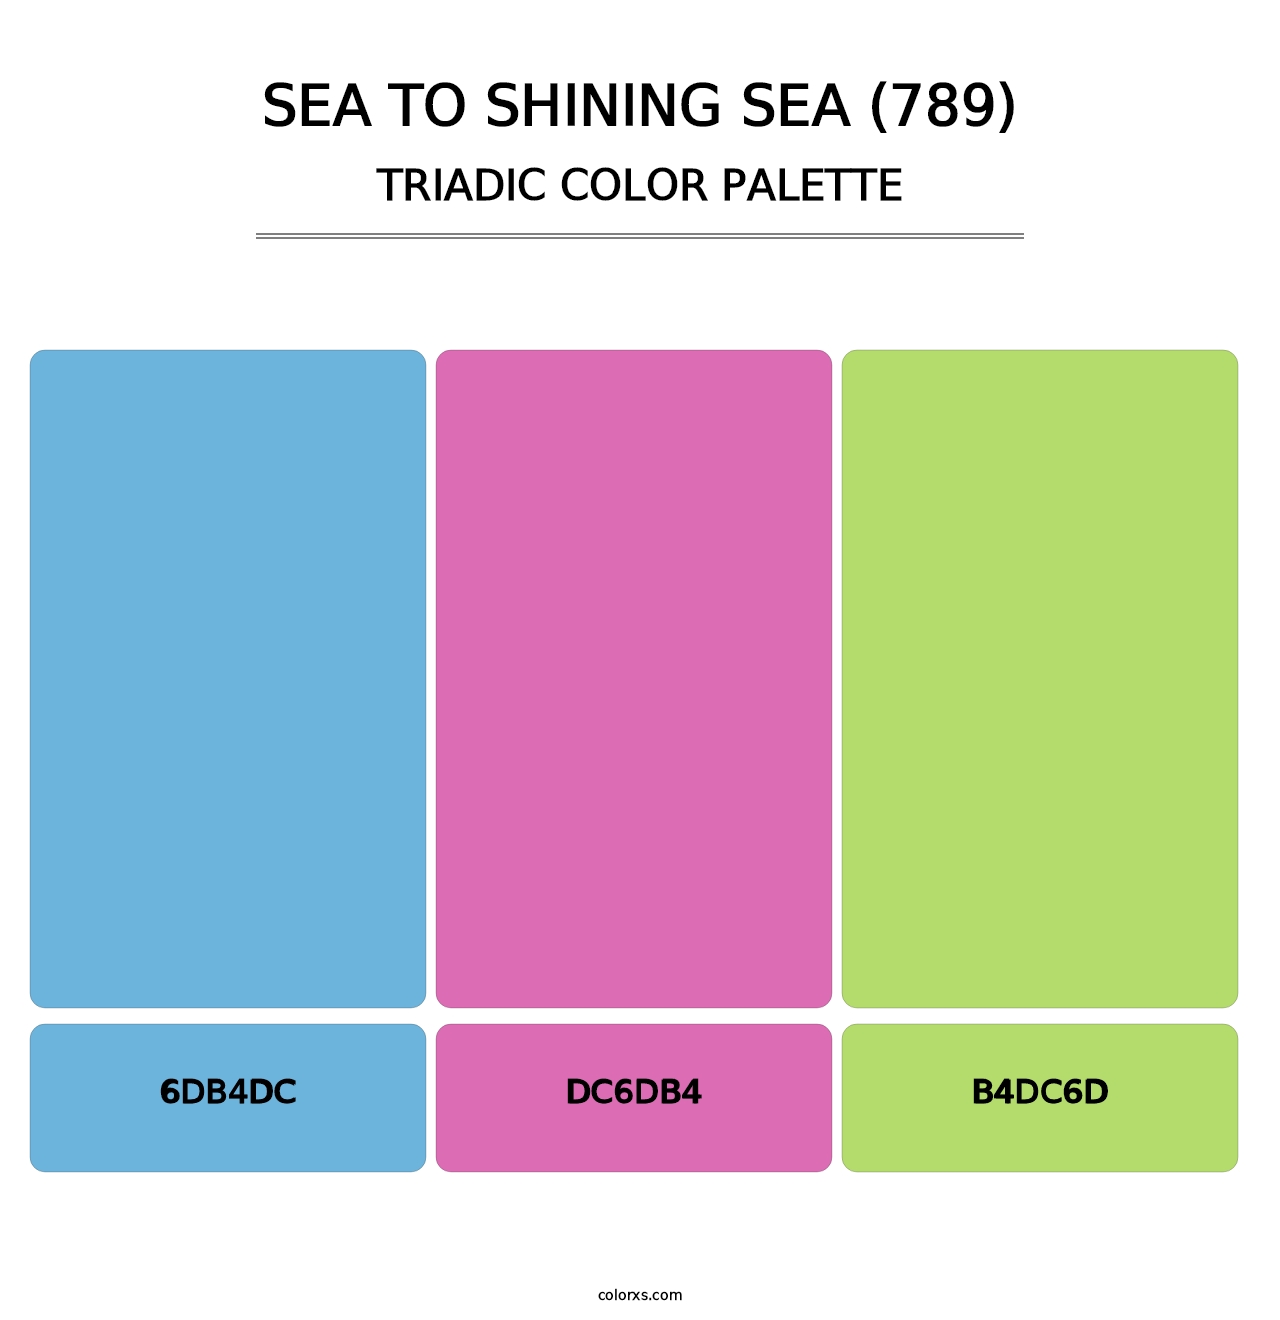 Sea to Shining Sea (789) - Triadic Color Palette